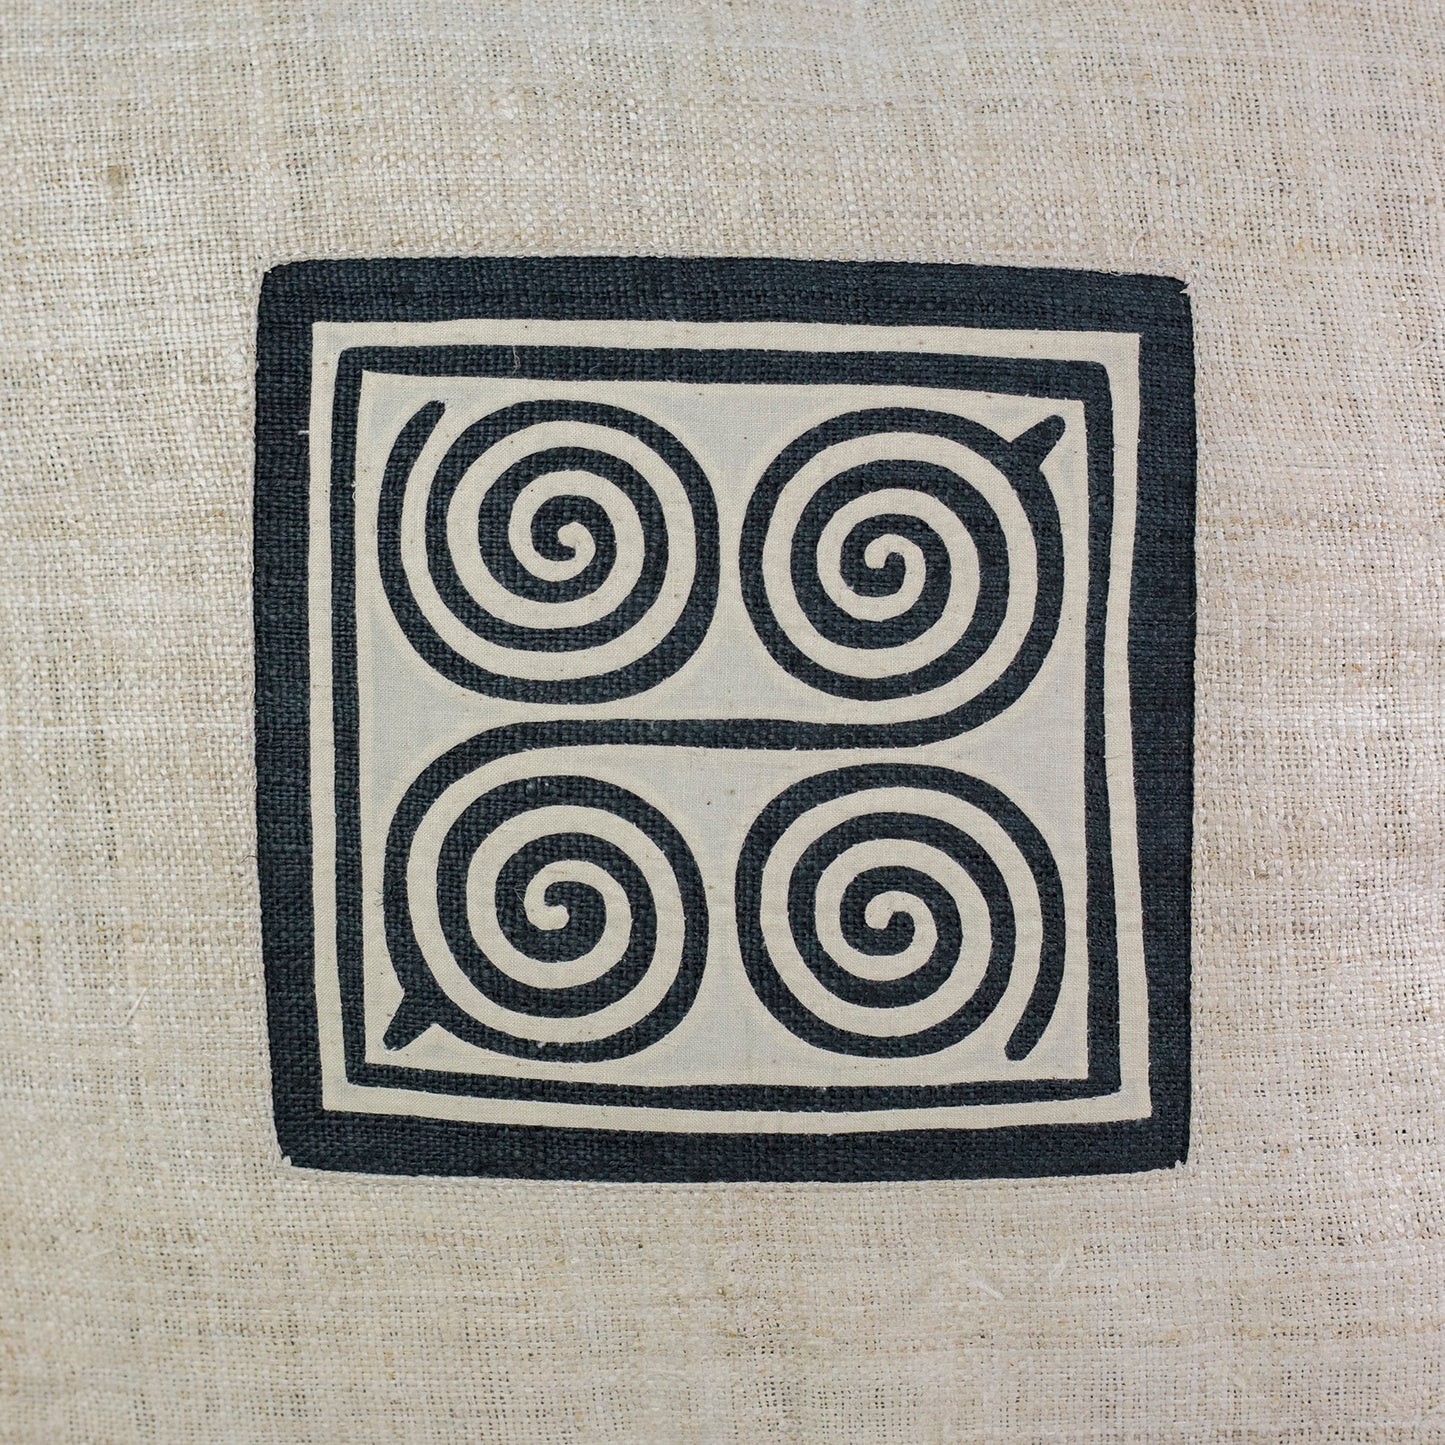 White Hemp Cushion Cover, beeswax batik corner, white hand-embroidered patch